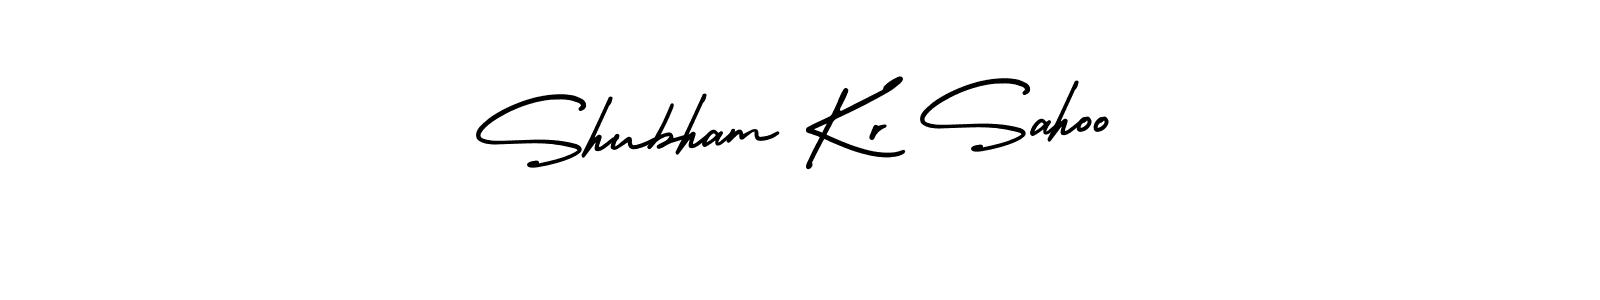 How to Draw Shubham Kr Sahoo signature style? AmerikaSignatureDemo-Regular is a latest design signature styles for name Shubham Kr Sahoo. Shubham Kr Sahoo signature style 3 images and pictures png